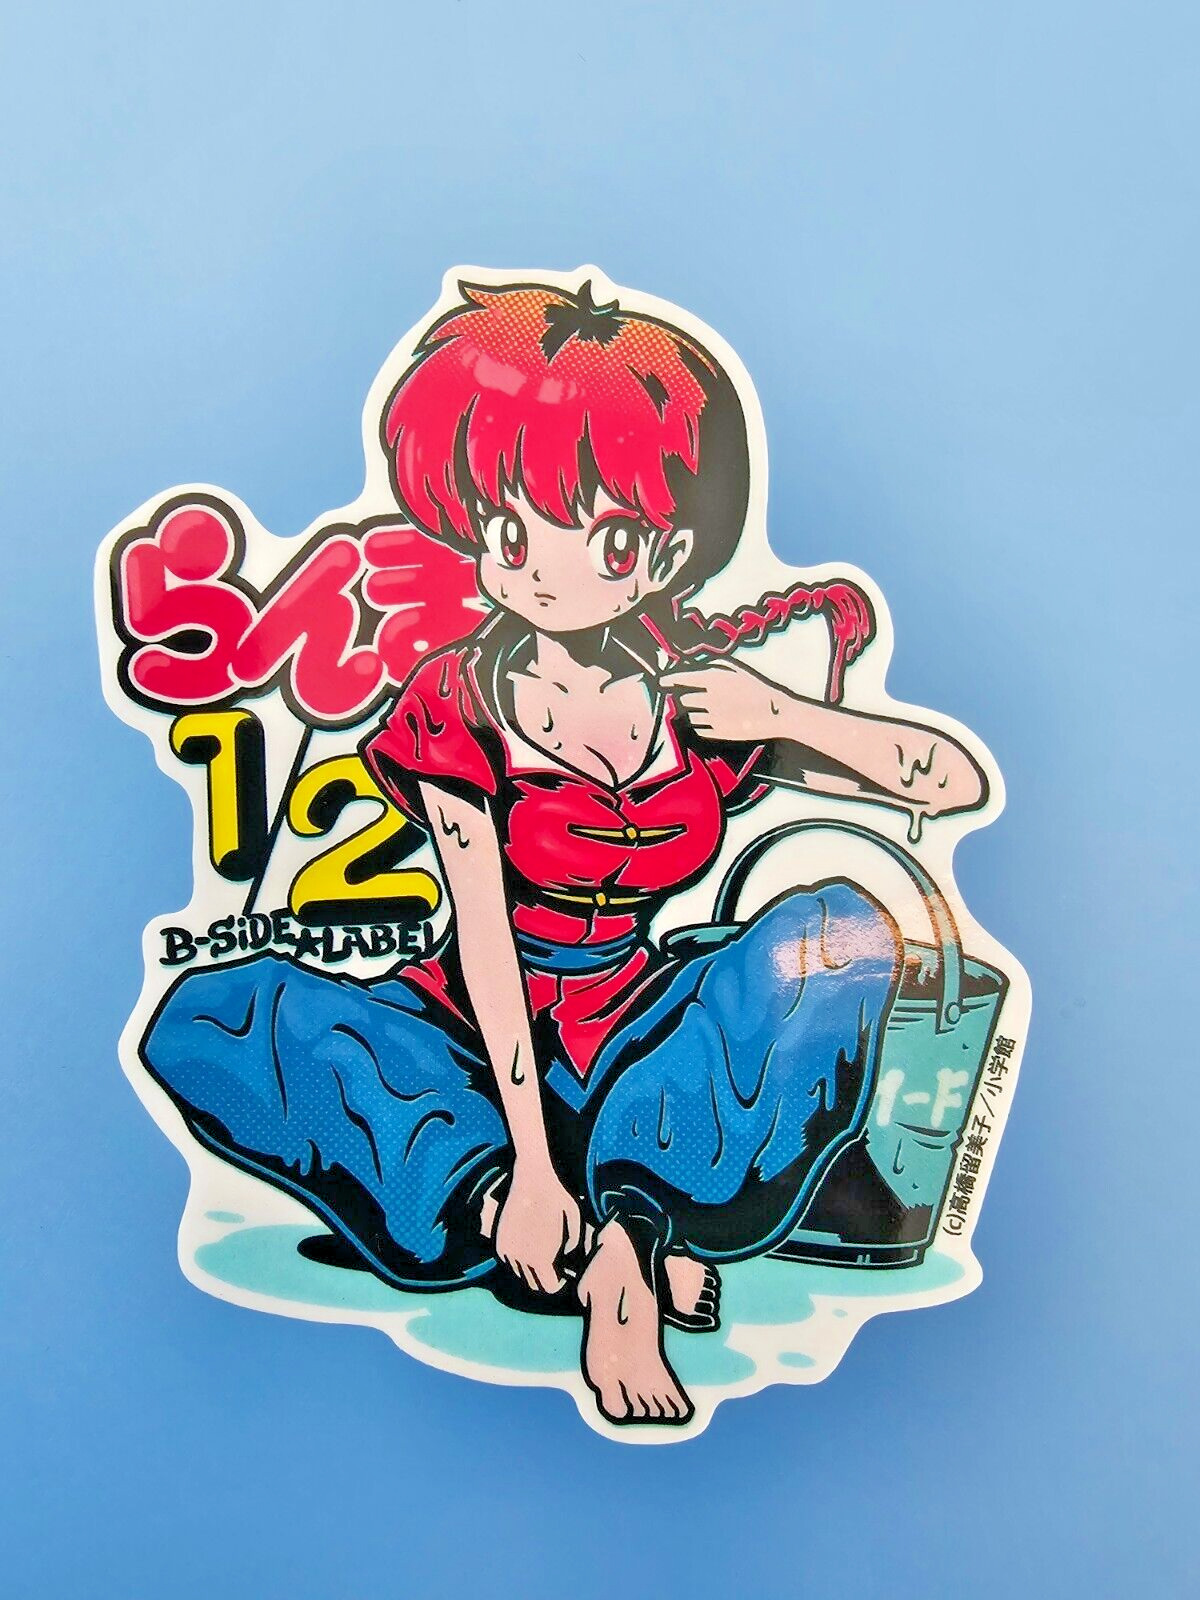 RUMIC WORLD Ramma 1/2 Girl Type Saotome B-SIDE LABEL Sticker US SELLER FAST SHIP